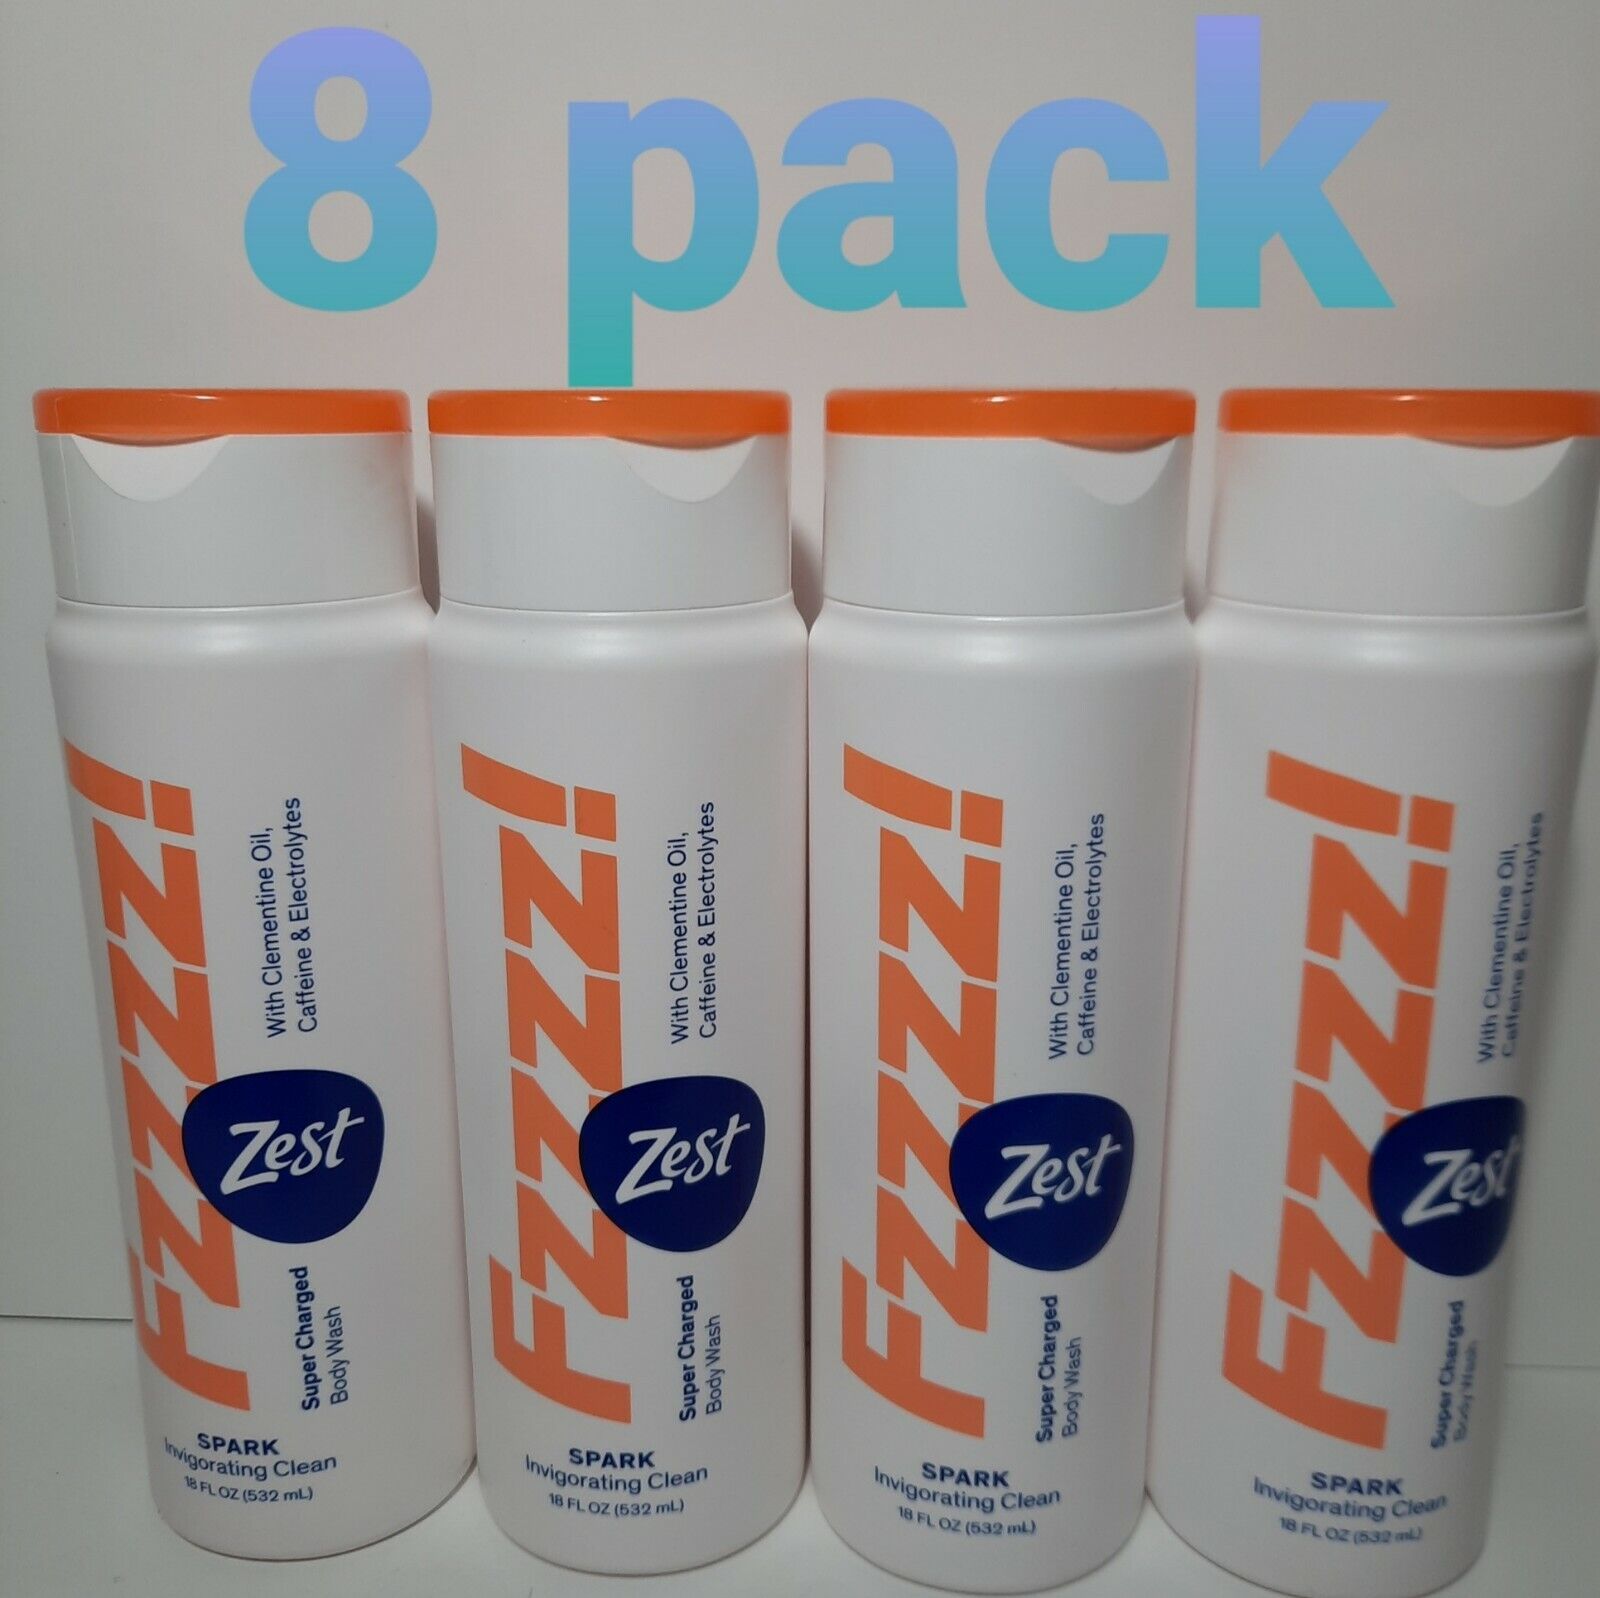 Zest Fzzzz Spark Body Wash Pack 8 #pb38 Oz 18 Super intense SALE sale